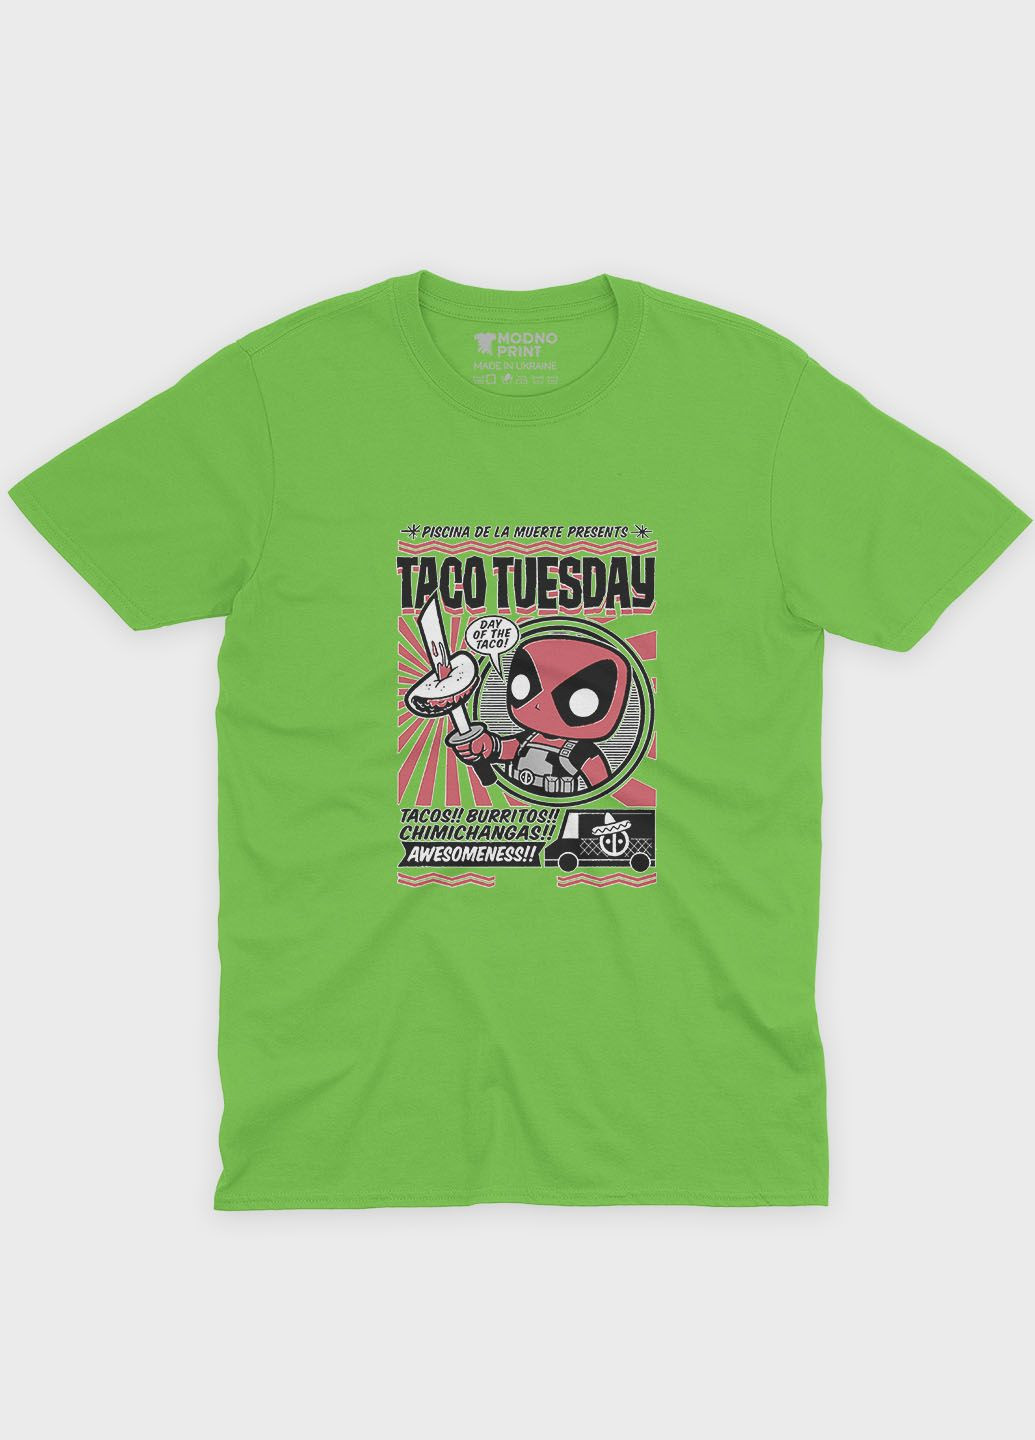 Салатовая демисезонная футболка для мальчика с принтом антигероя - дедпул (ts001-1-kiw-006-015-011-b) Modno